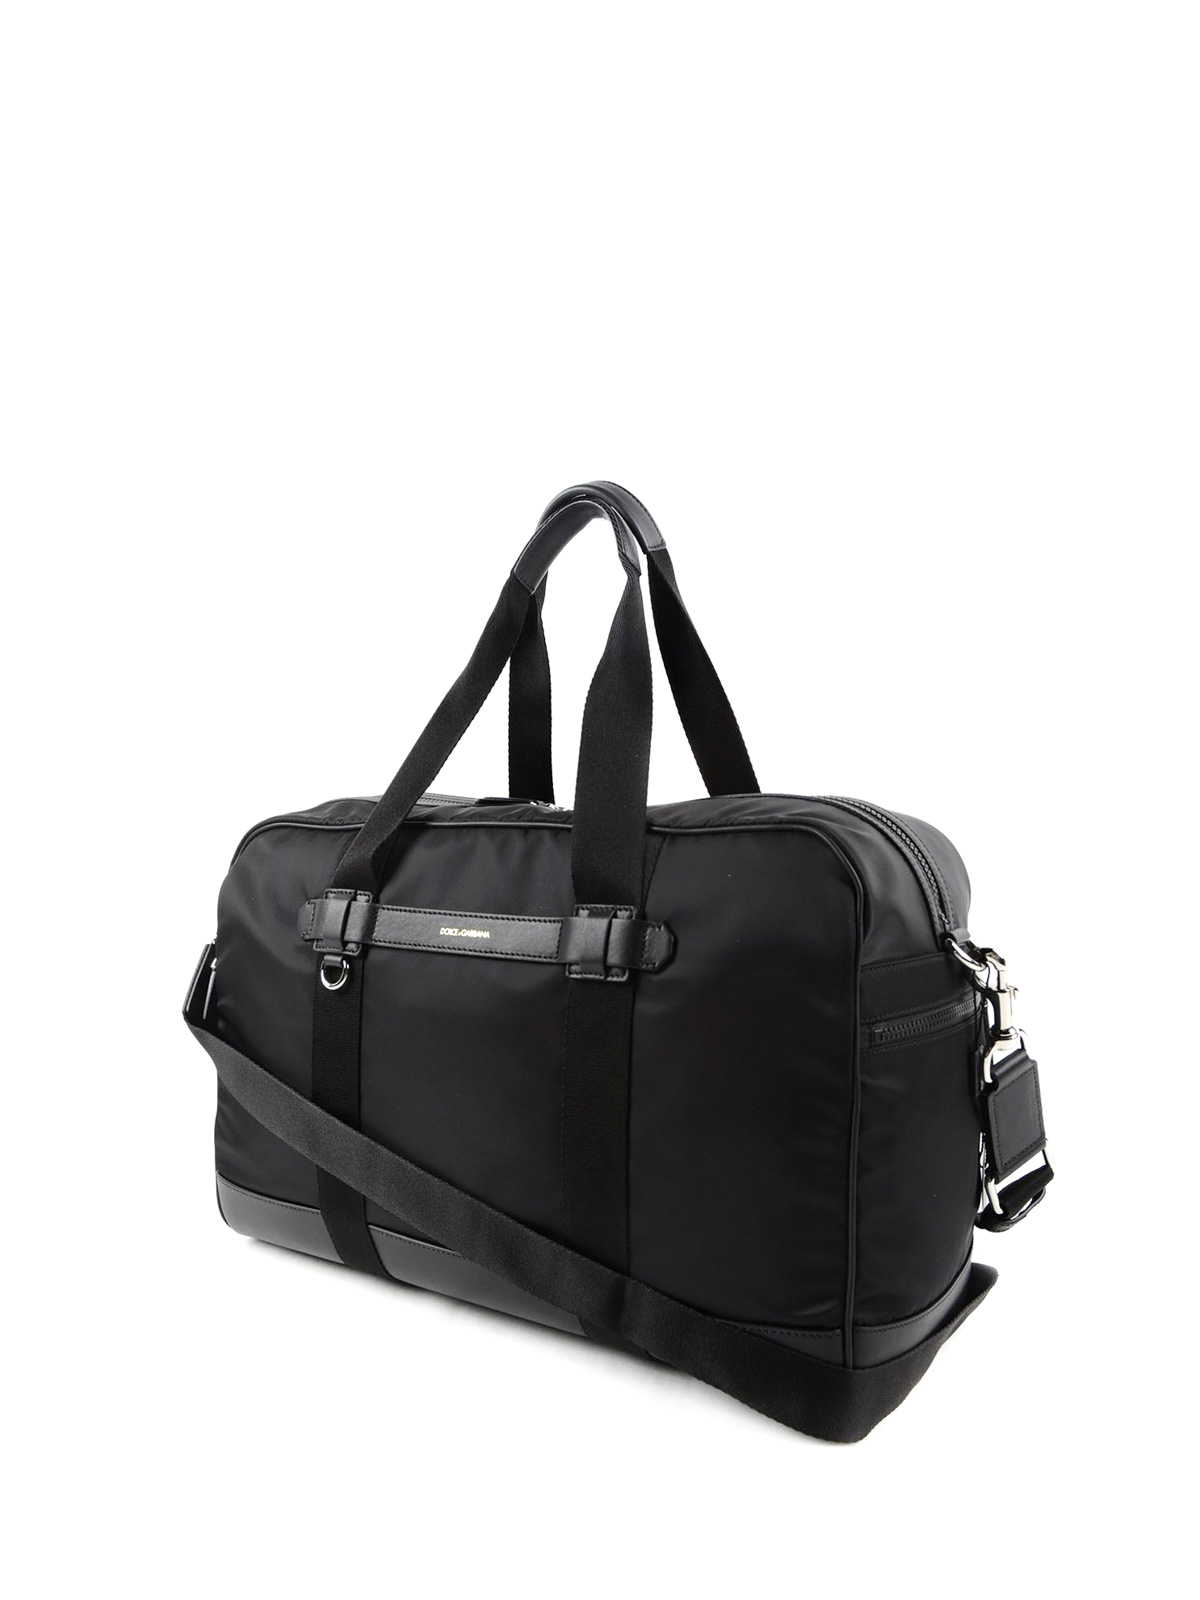 Luggage & Travel bags Dolce & Gabbana - Boston nylon and leather travel bag  - BM1441AE9818B956